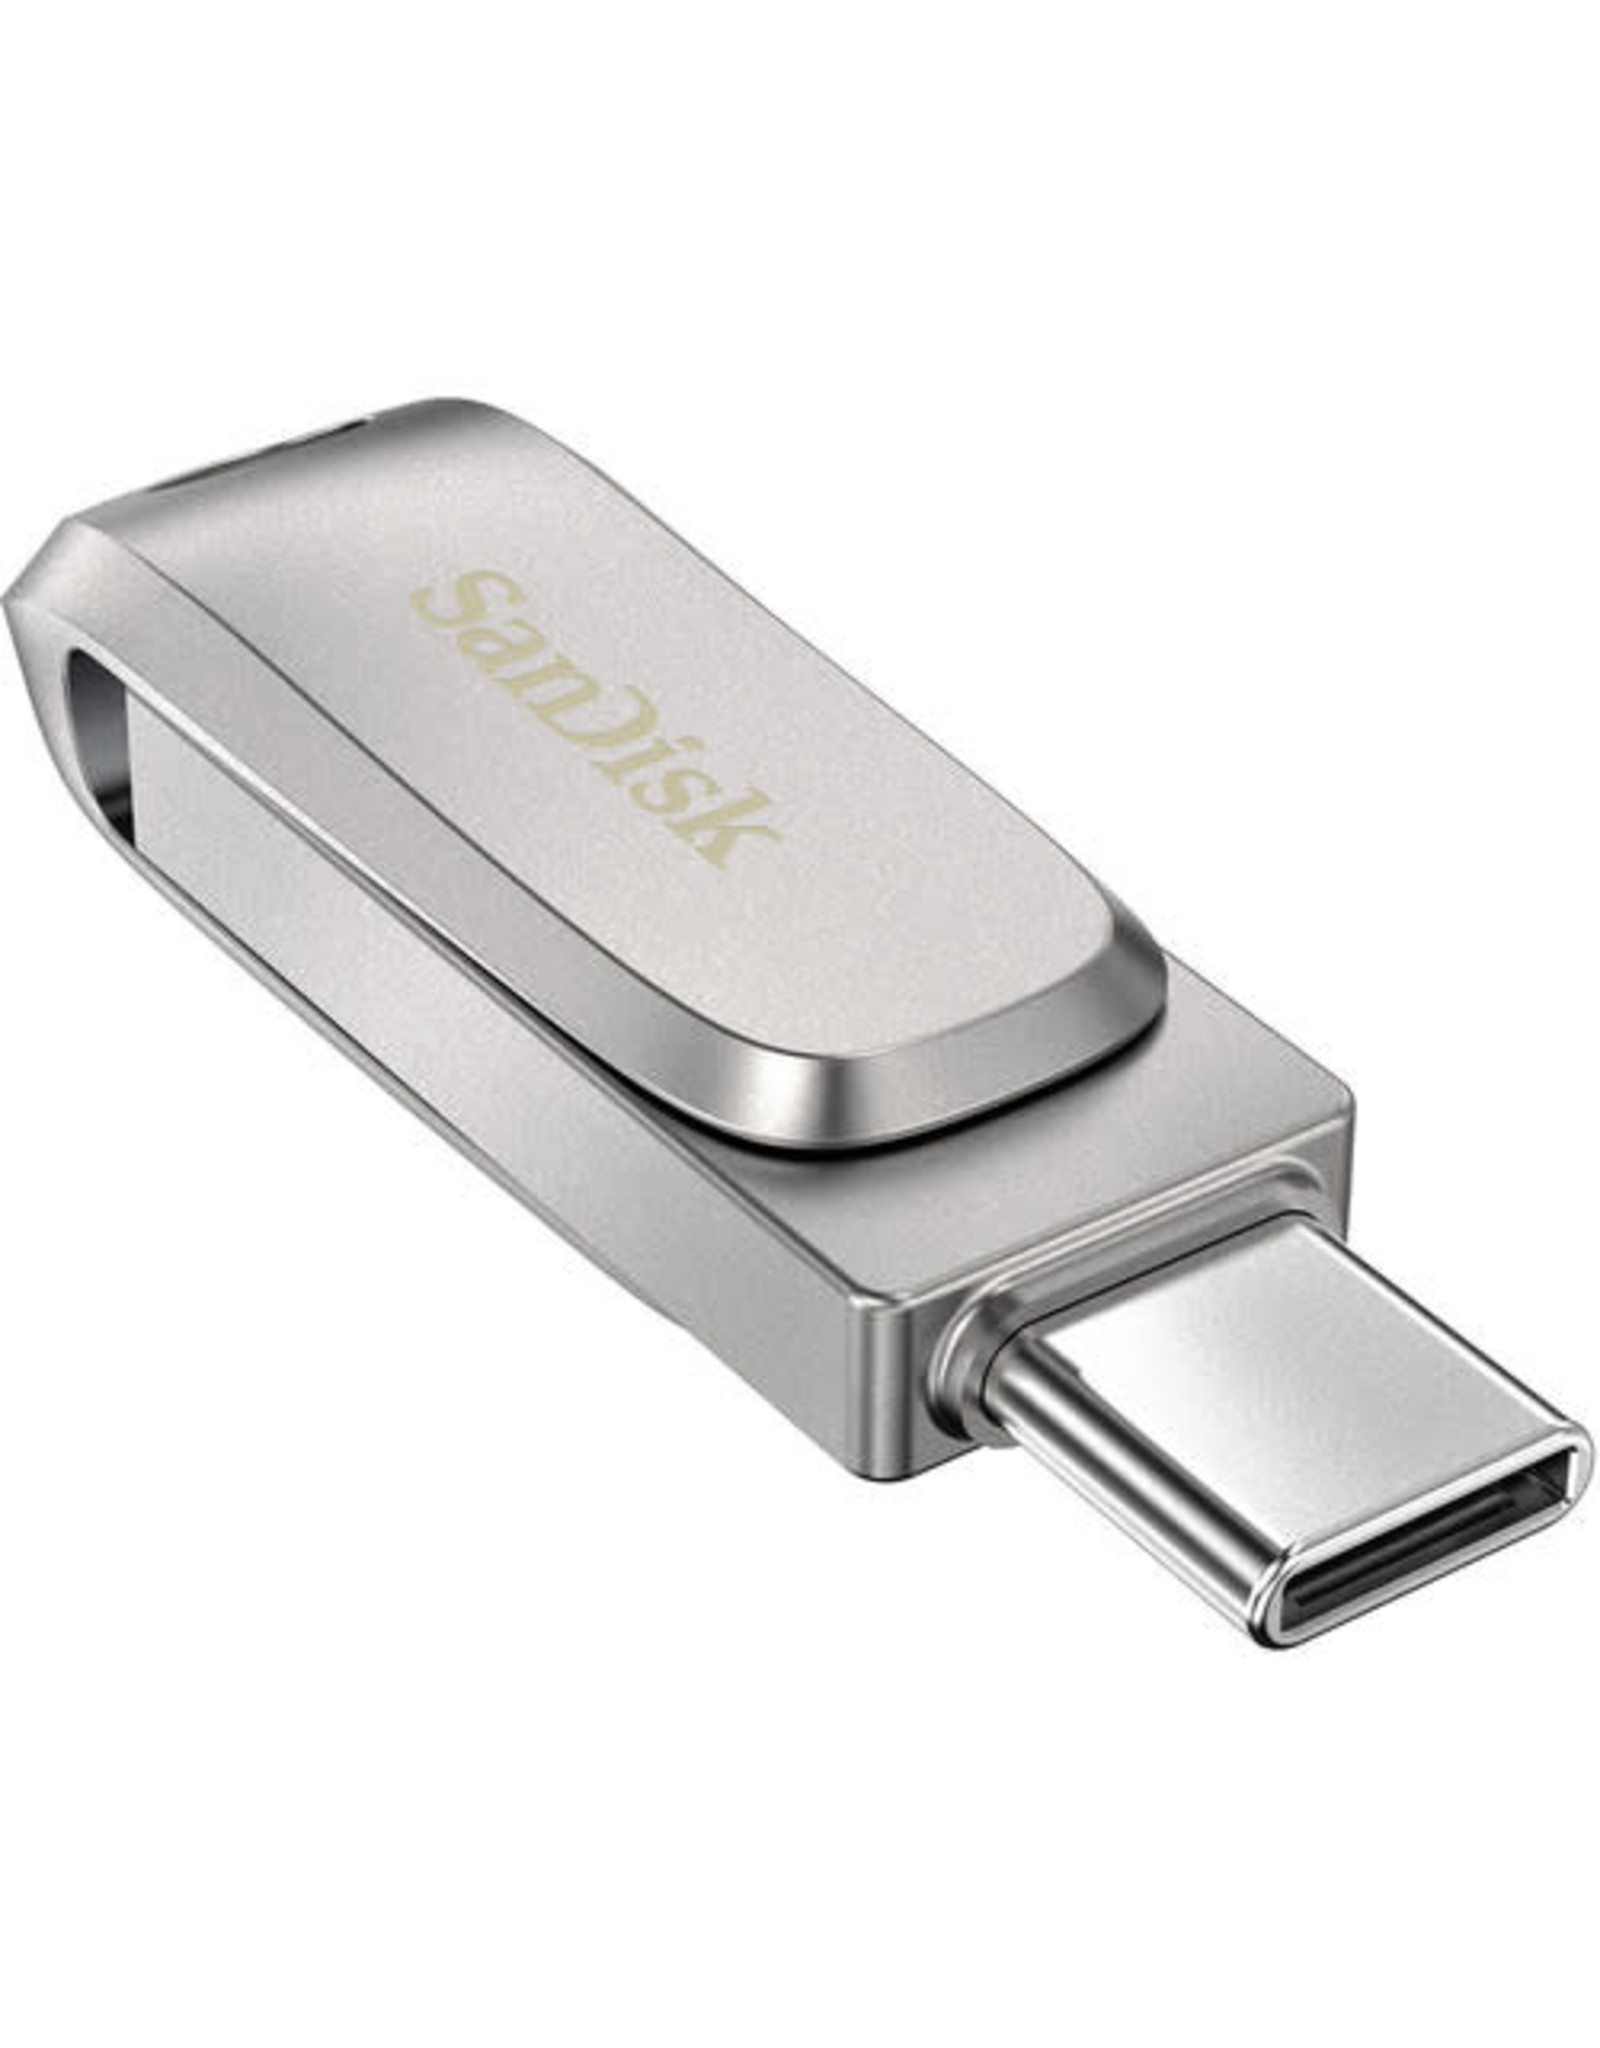 SANDISK SANDISK 128GB ULTRA DUAL DRIVE LUXE USB 3.1 FLASH DRIVE